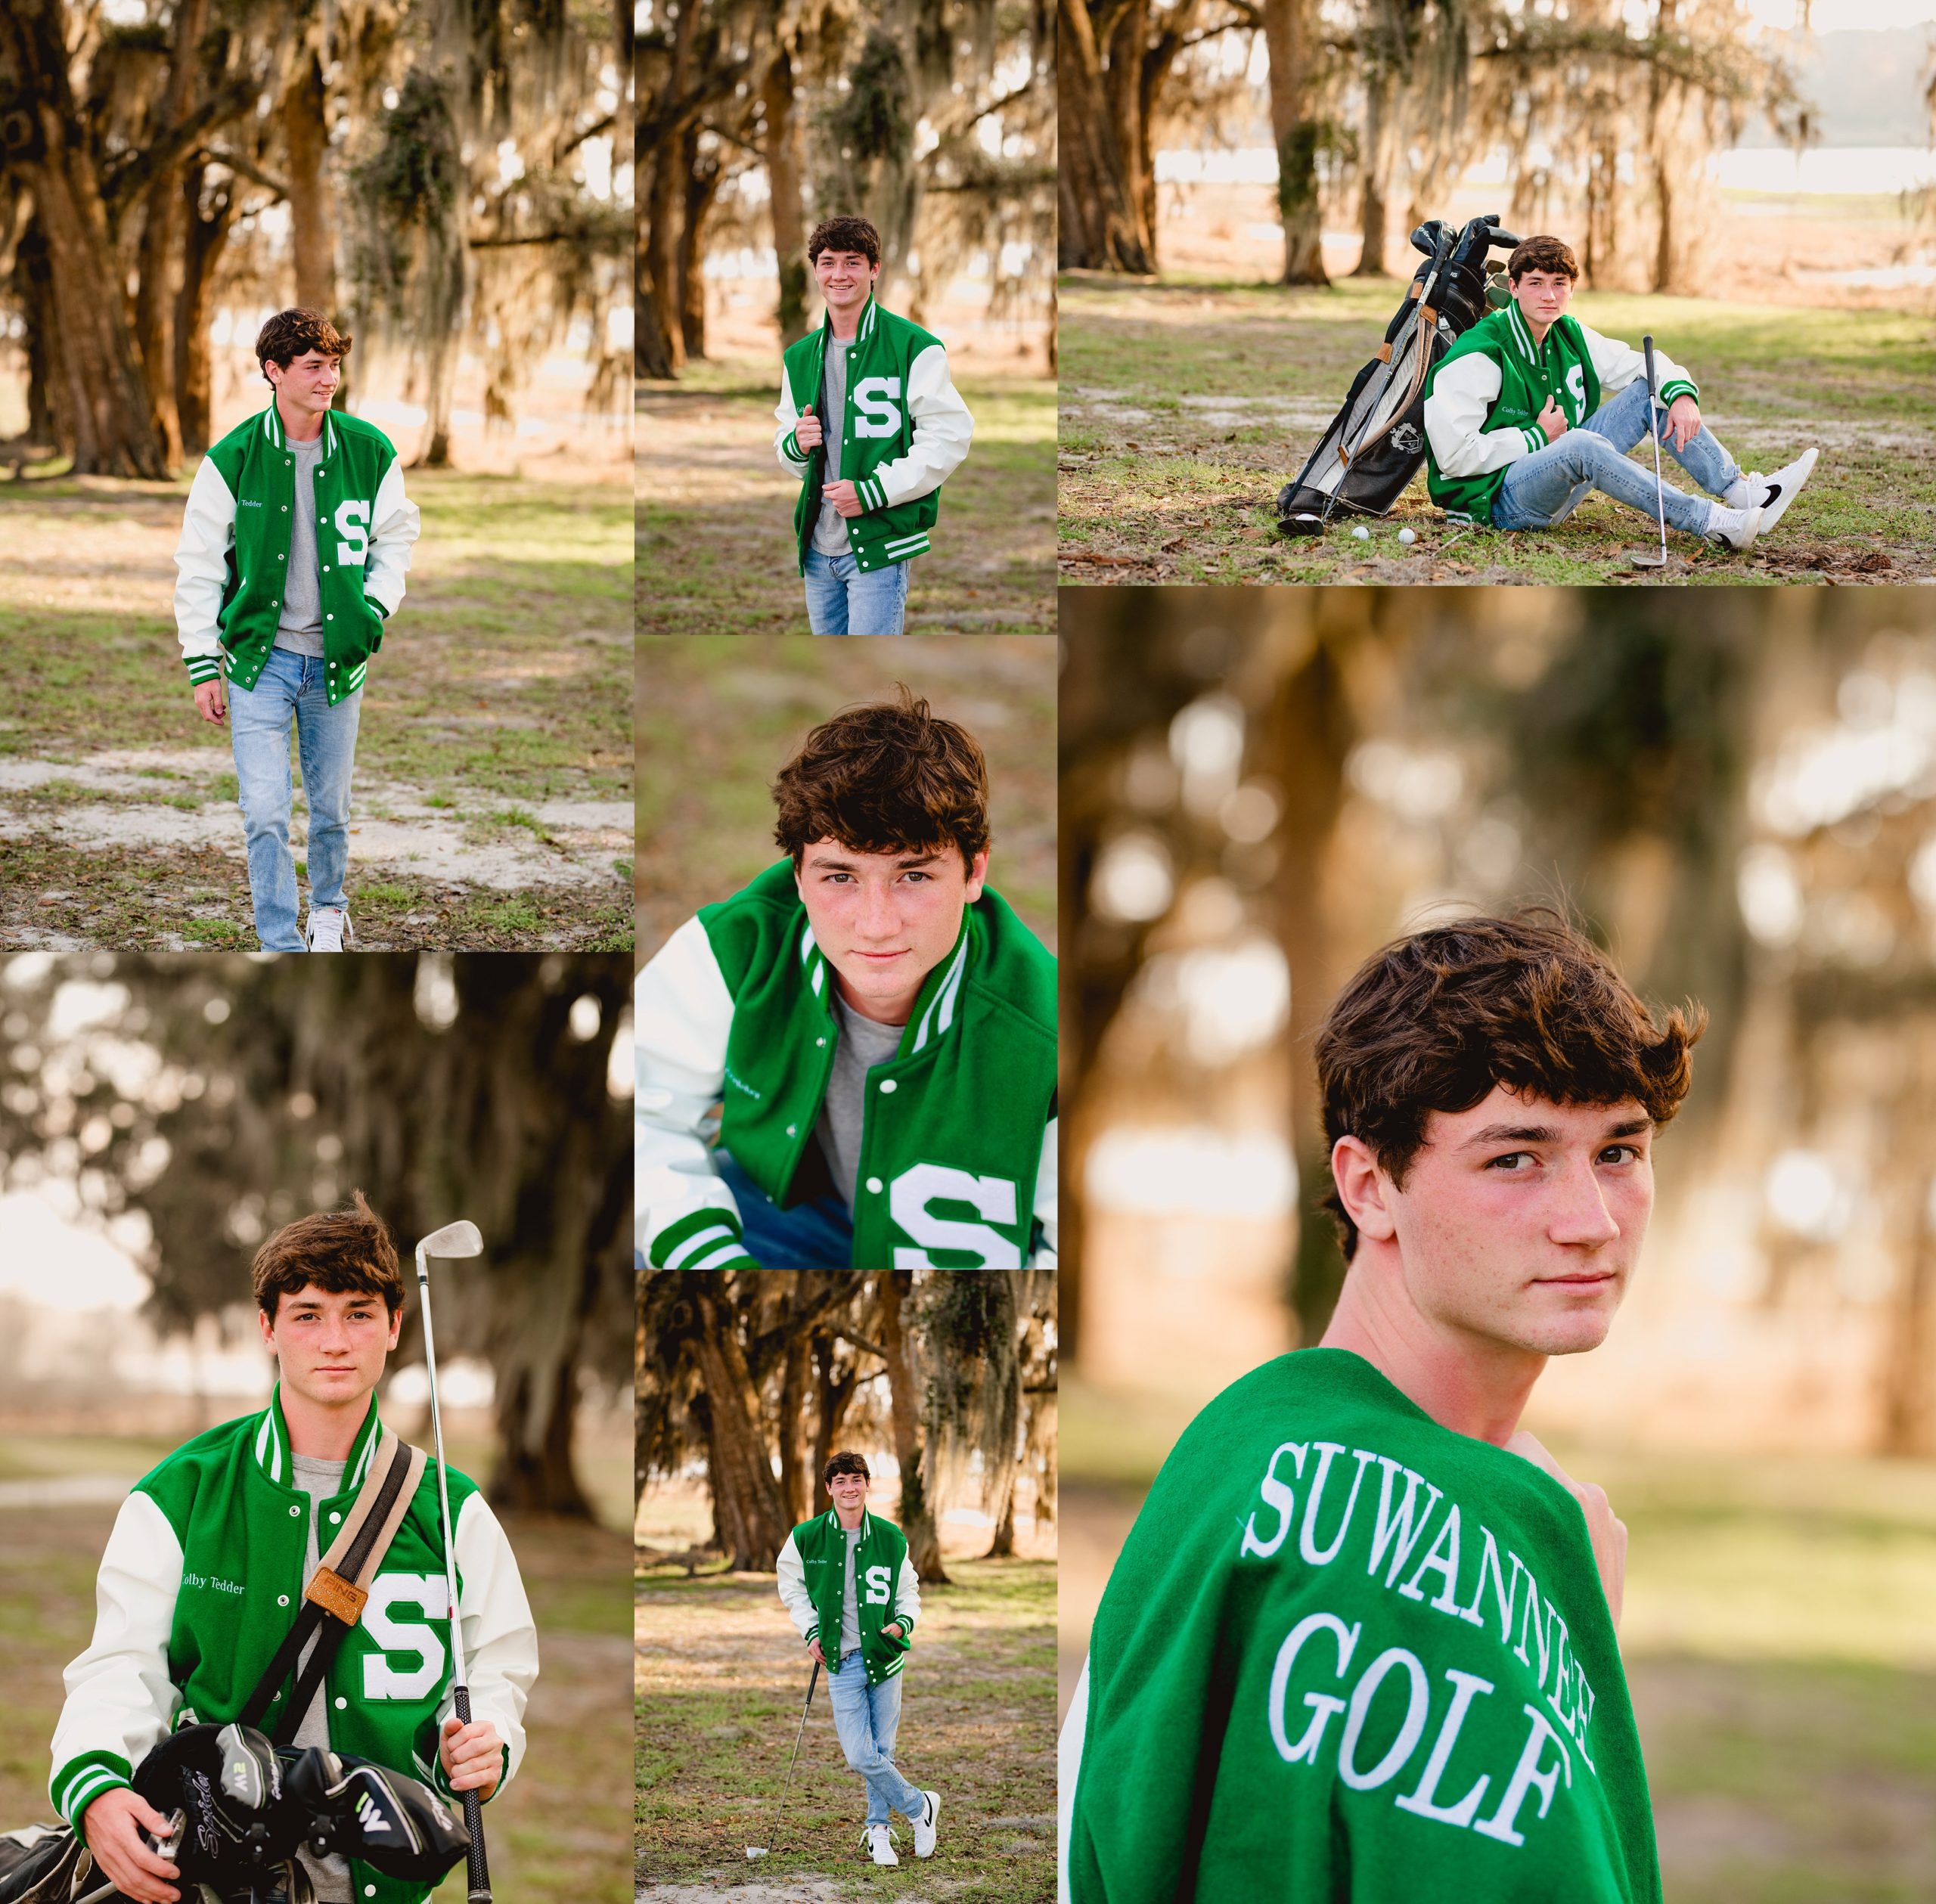 Guy senior pics with letterman jacket on golf course. Senior boy poses